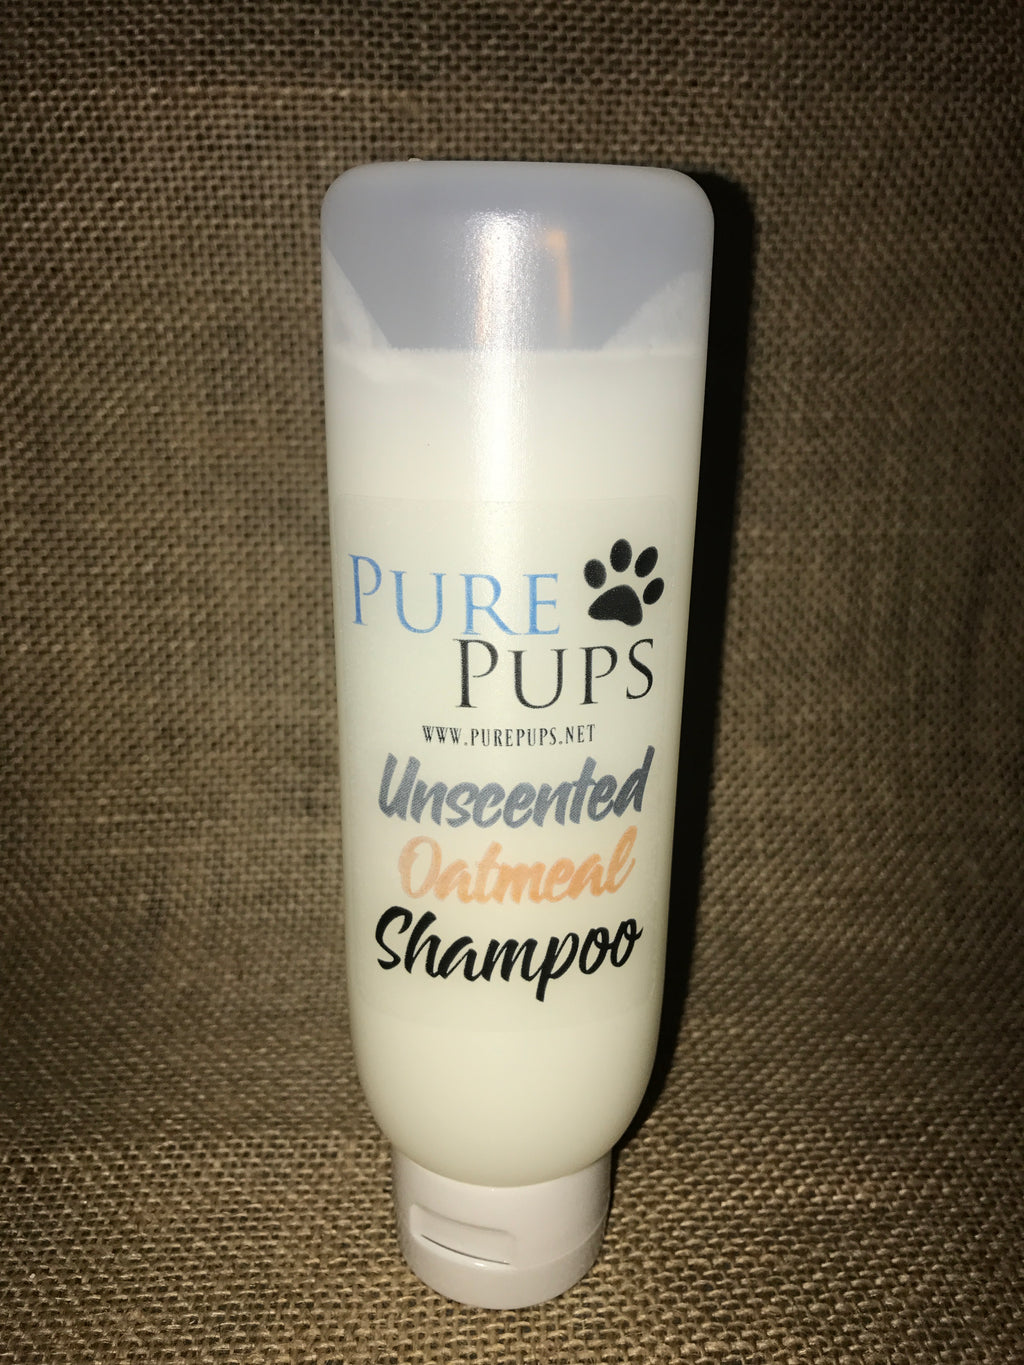 Pups Shampoo